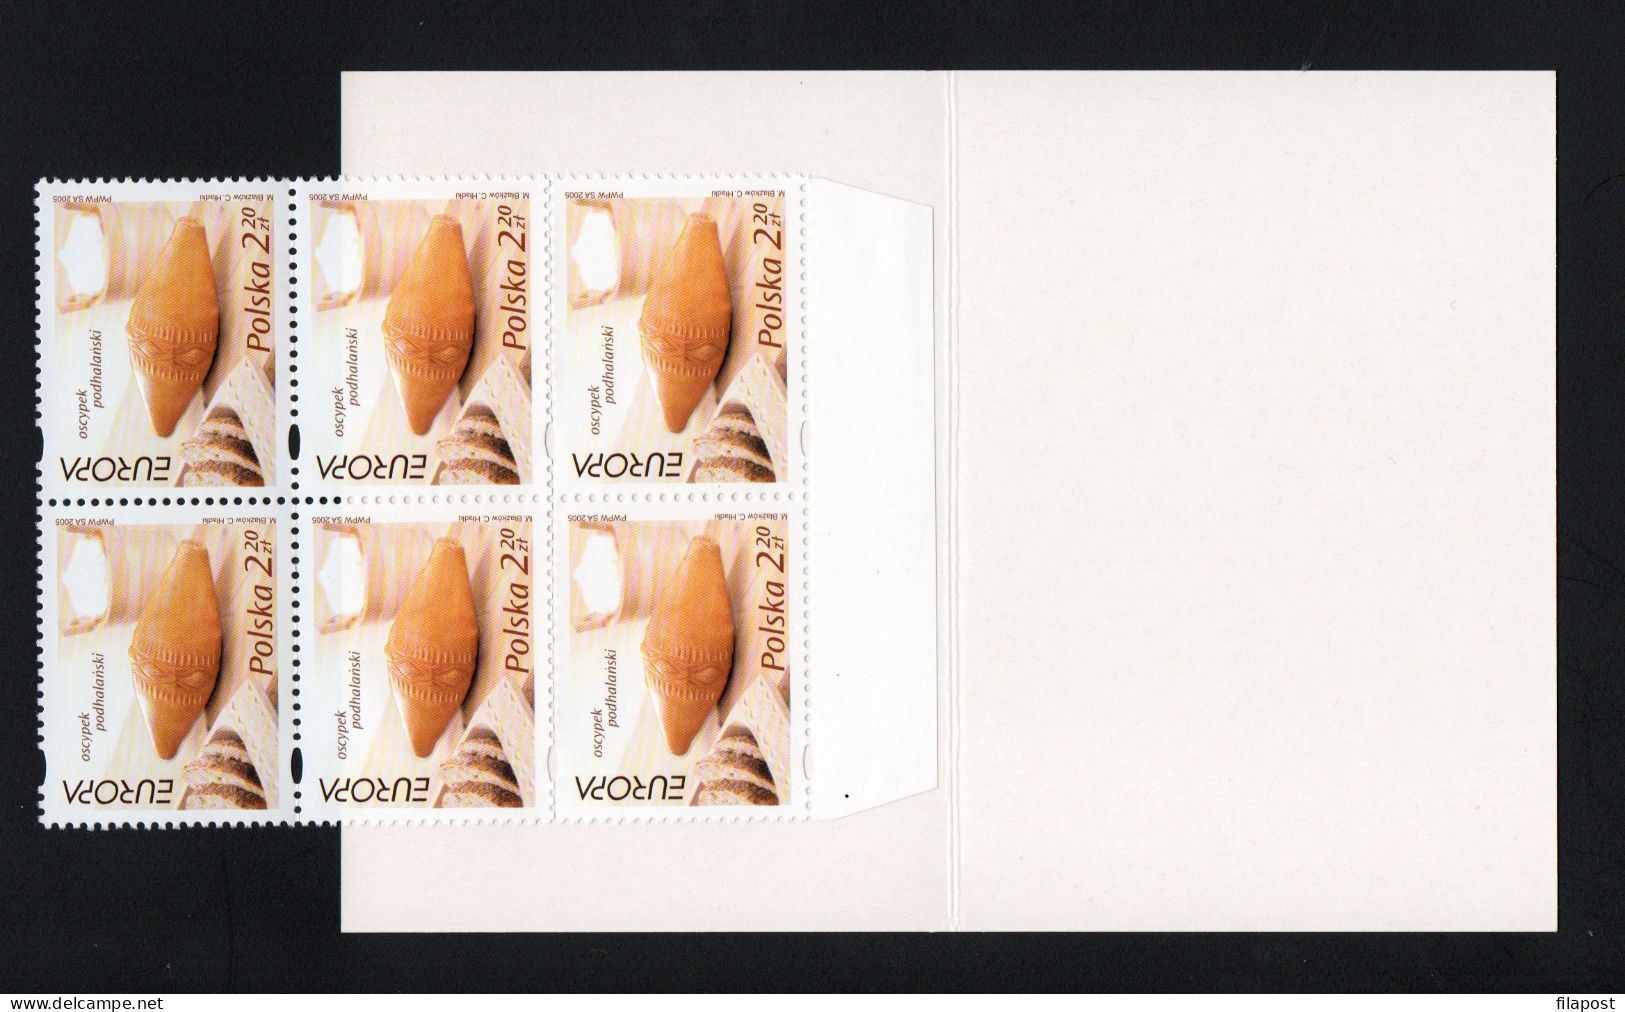 Poland 2005 Mi 4183 Europa - CEPT, Oscypek Cheese, Karpaty Mountain Traditional Food Booklet Set Of 6 Stamps MNH** - Markenheftchen